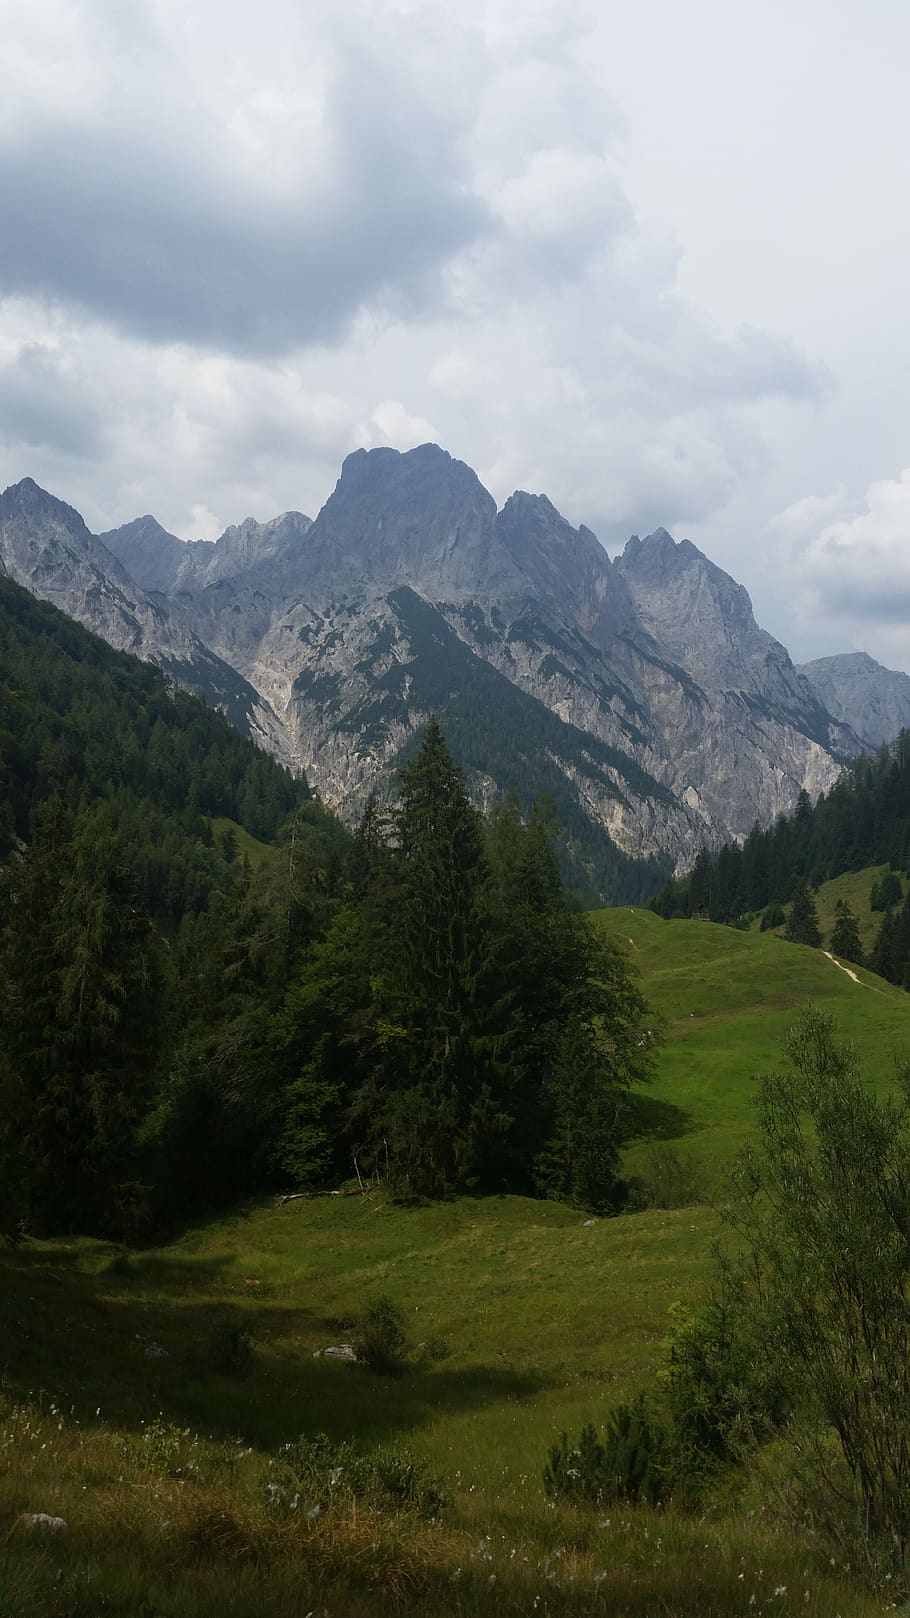 watzmann, bavaria, summer, mountain, beauty in nature, scenics - nature, sky, environment, cloud - sky, landscape